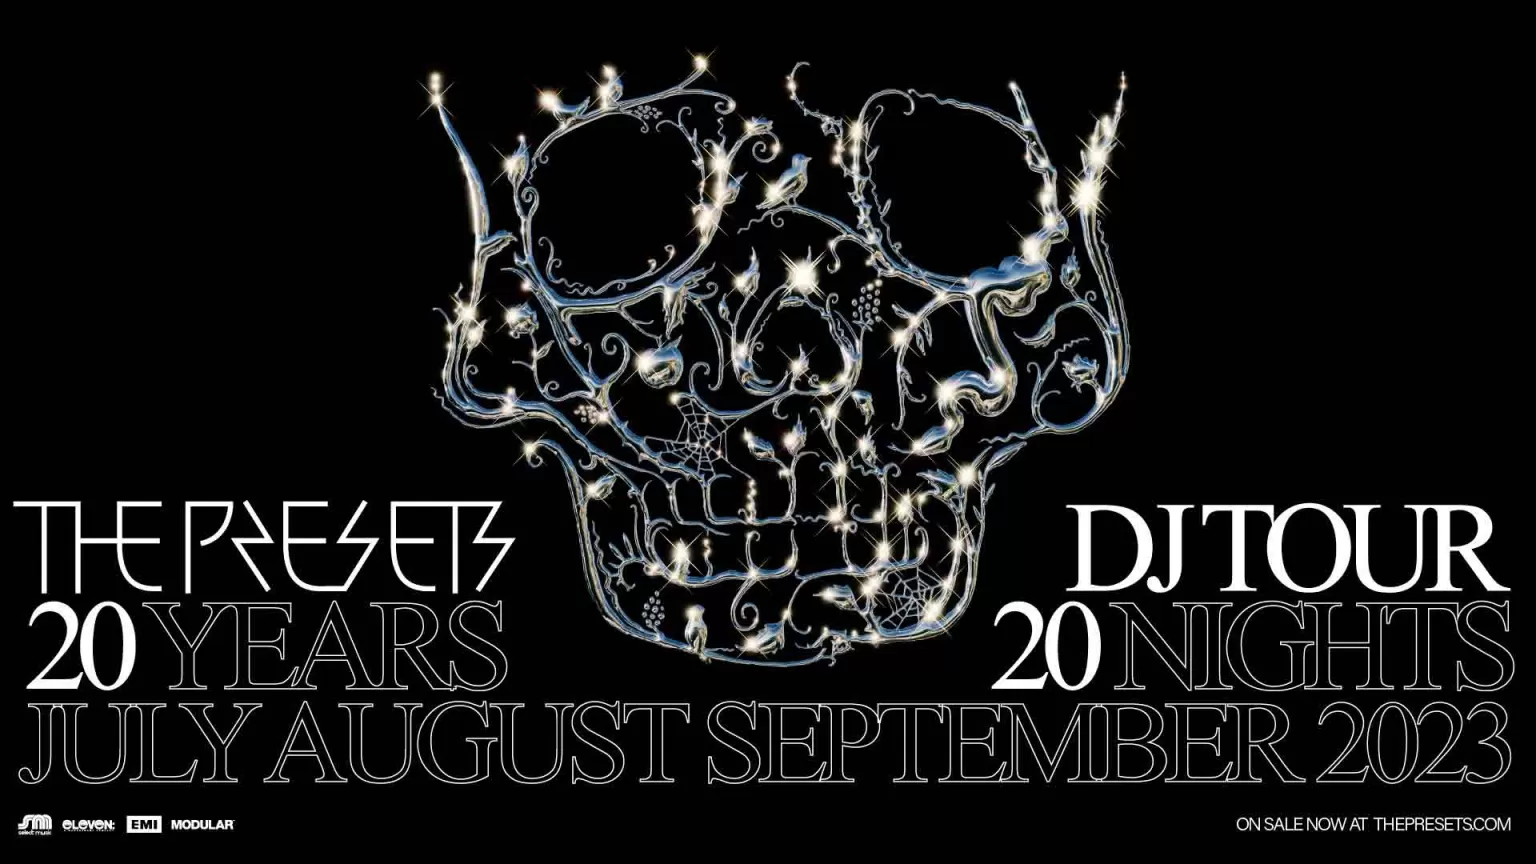 THE PRESETS – 20 YEARS. 20 NIGHTS. DJ TOUR. image